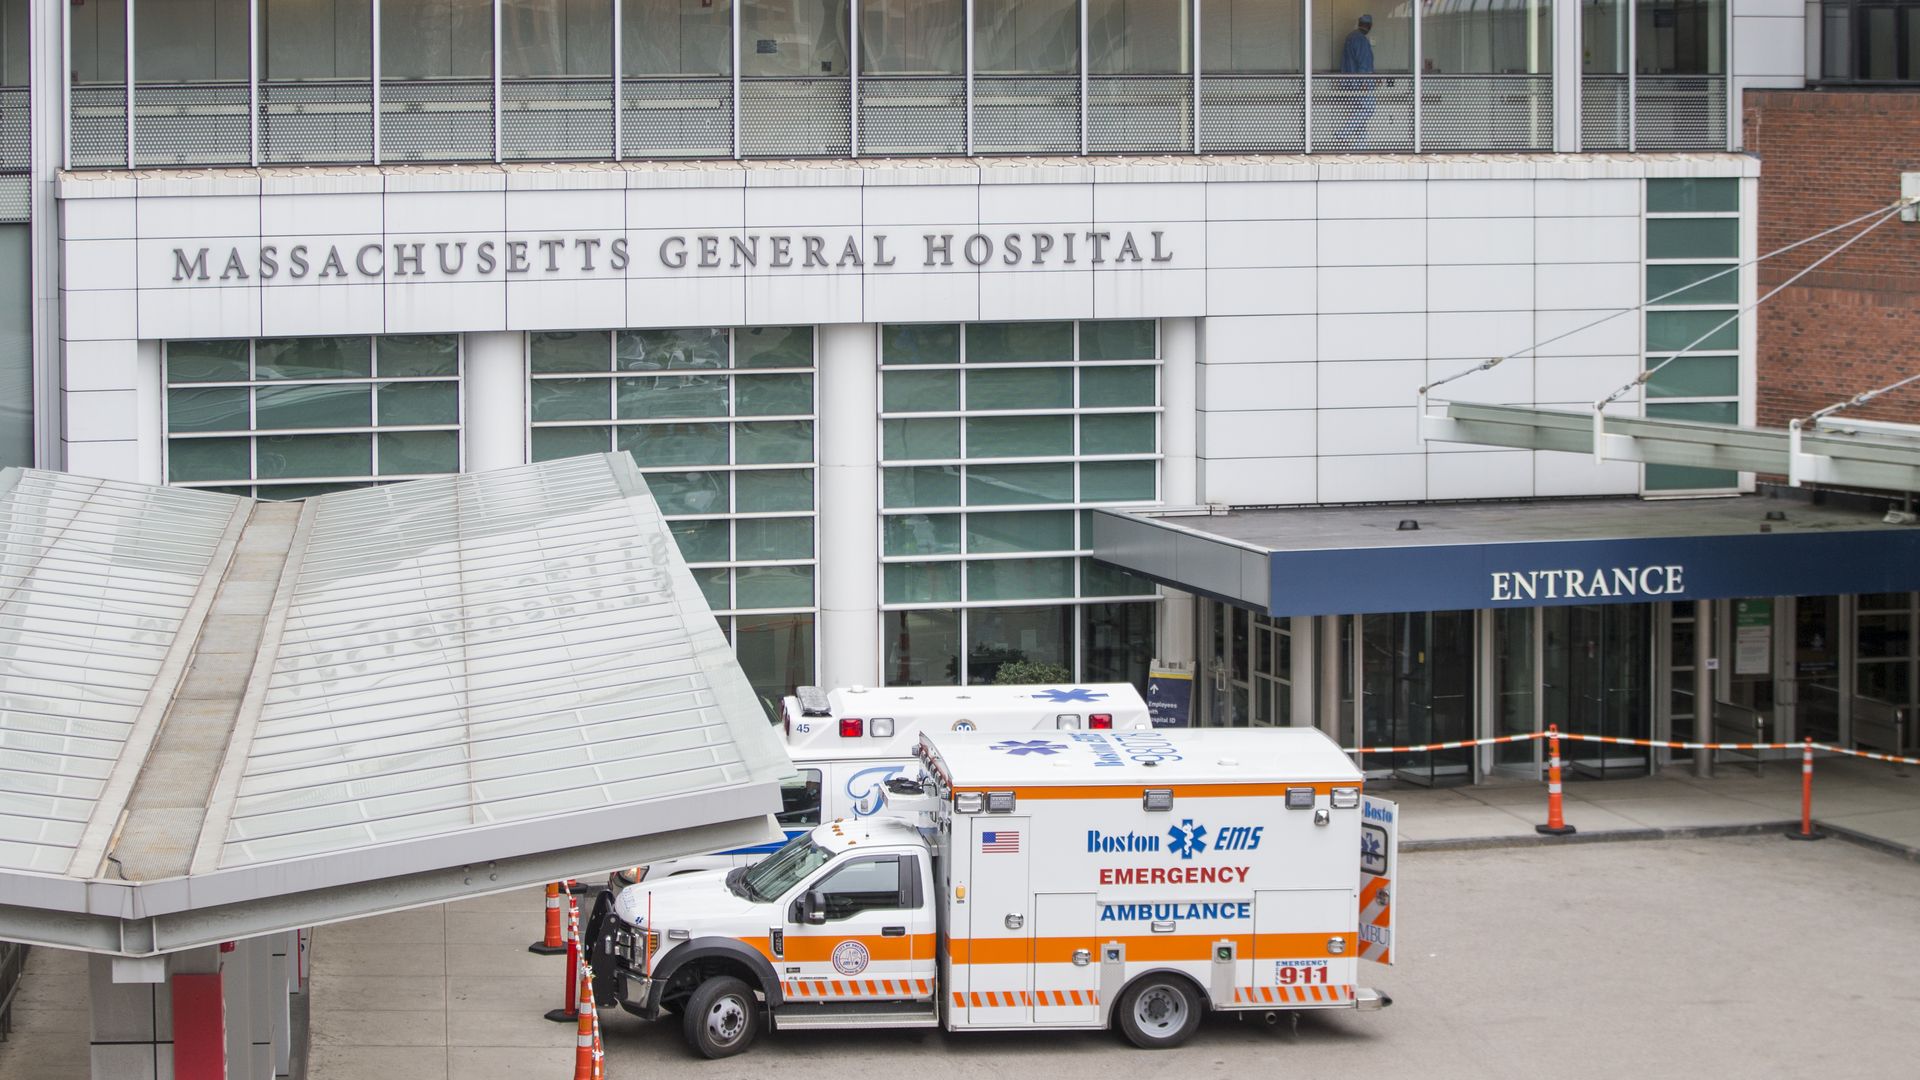 Ambulances parked outside Massachusetts General Hospital building.